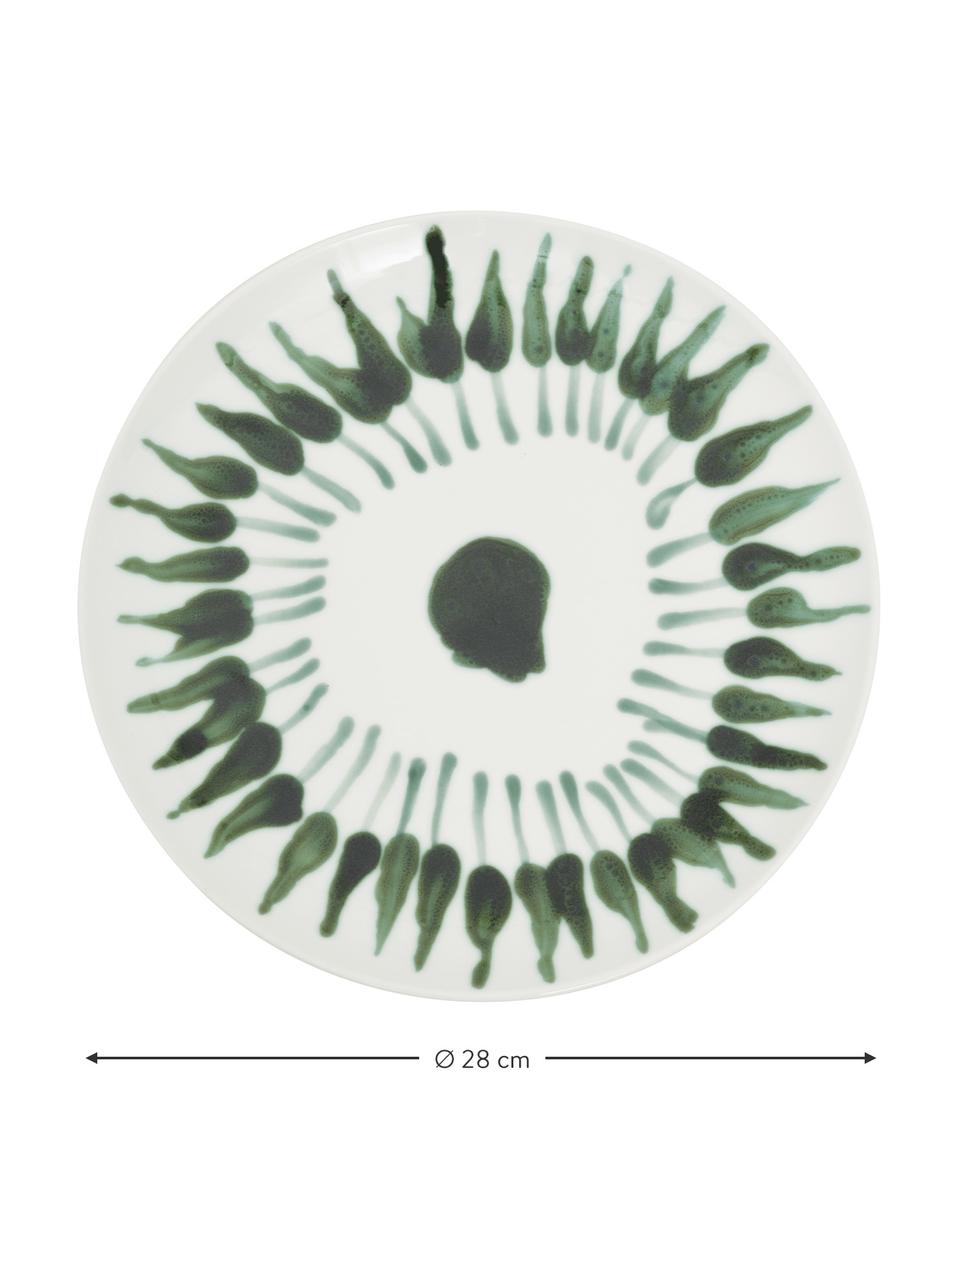 Plato llano artesanal Sparks, Gres, Blanco, verde, Ø 28 cm